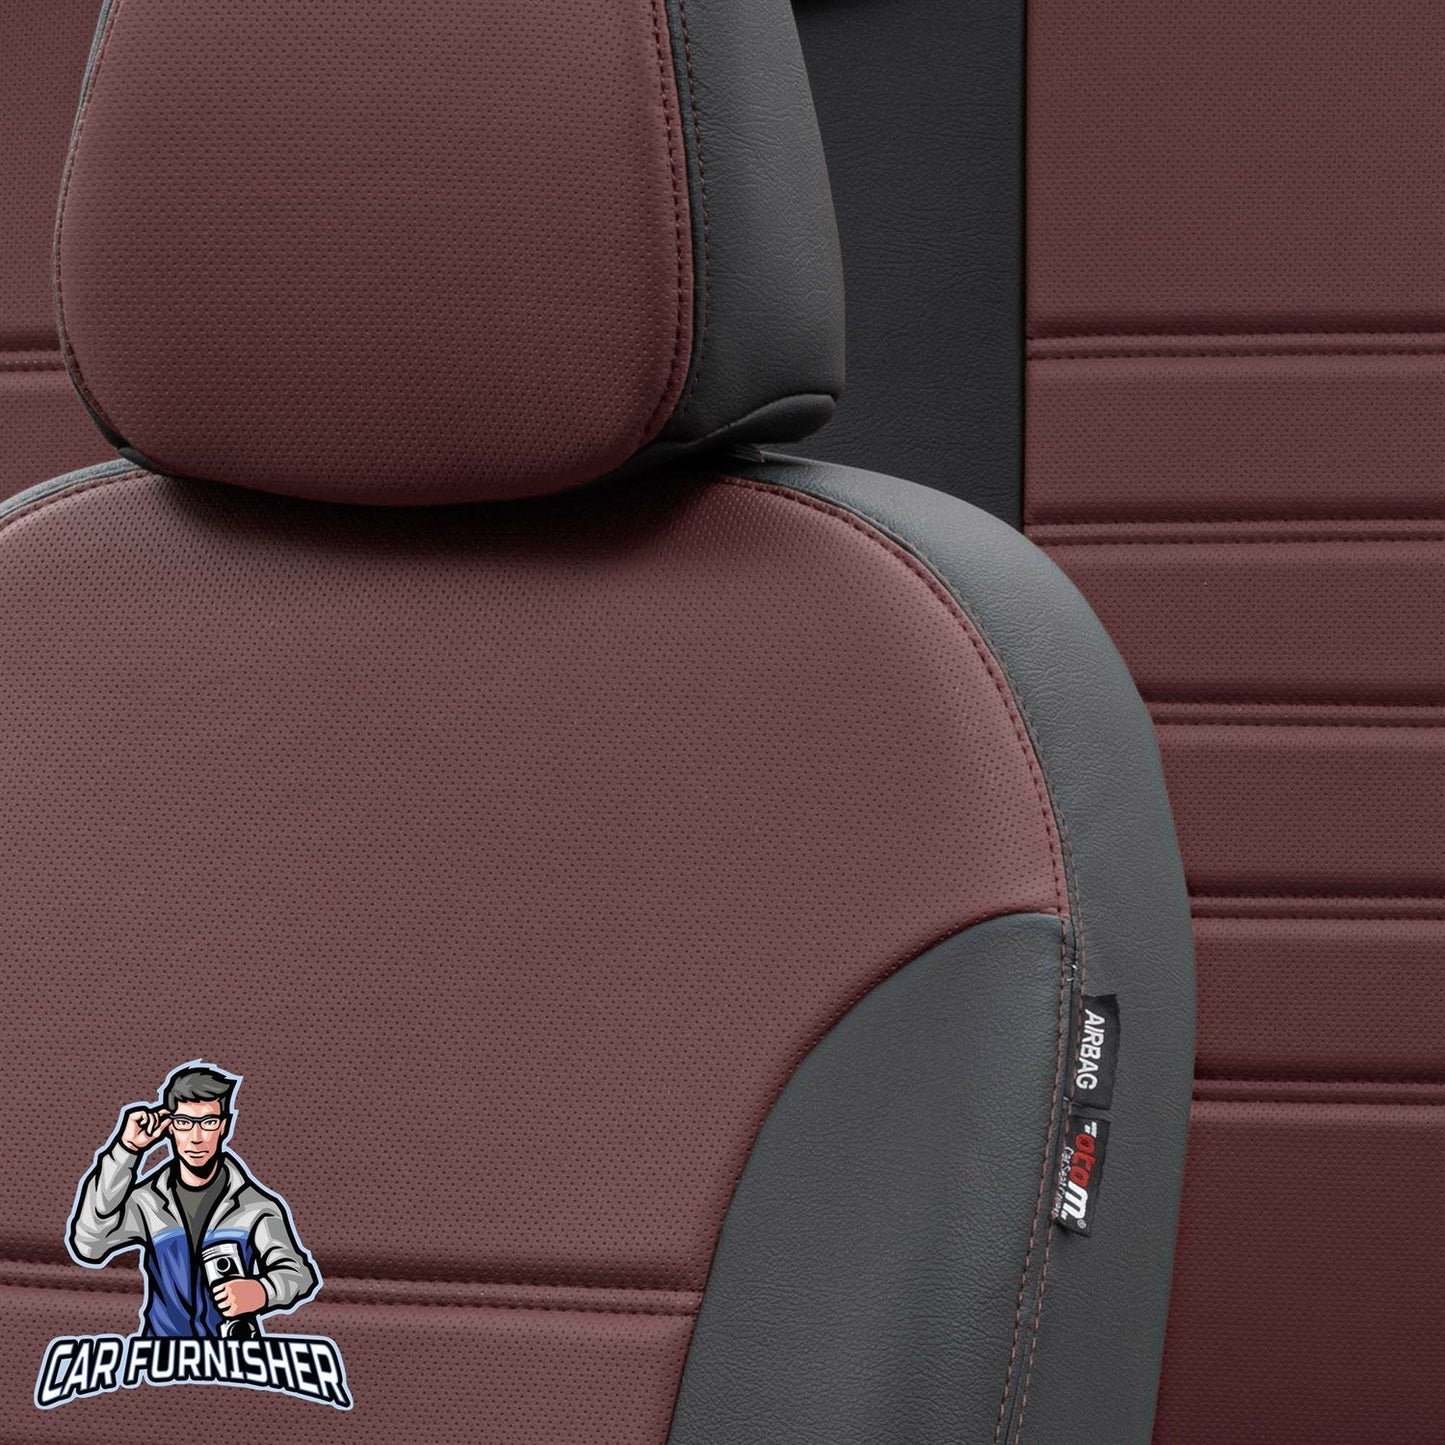 Alfa Romeo 147 Seat Covers Istanbul Leather Design Burgundy Leather